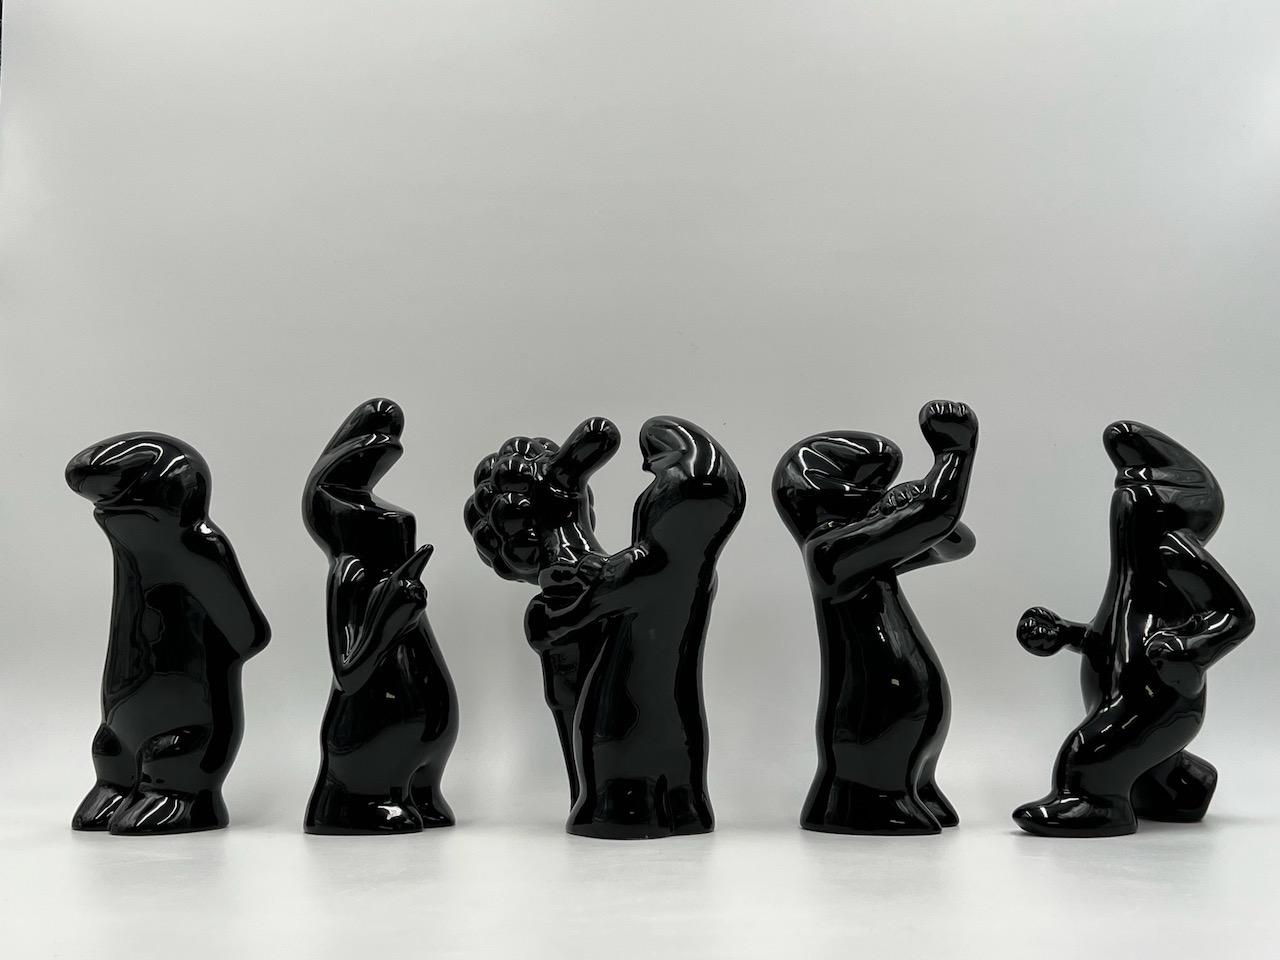 Iconic Ceramic Sculpture 'La Linea' Cavandoli - 'Brooding' Figurine, 1960s For Sale 6